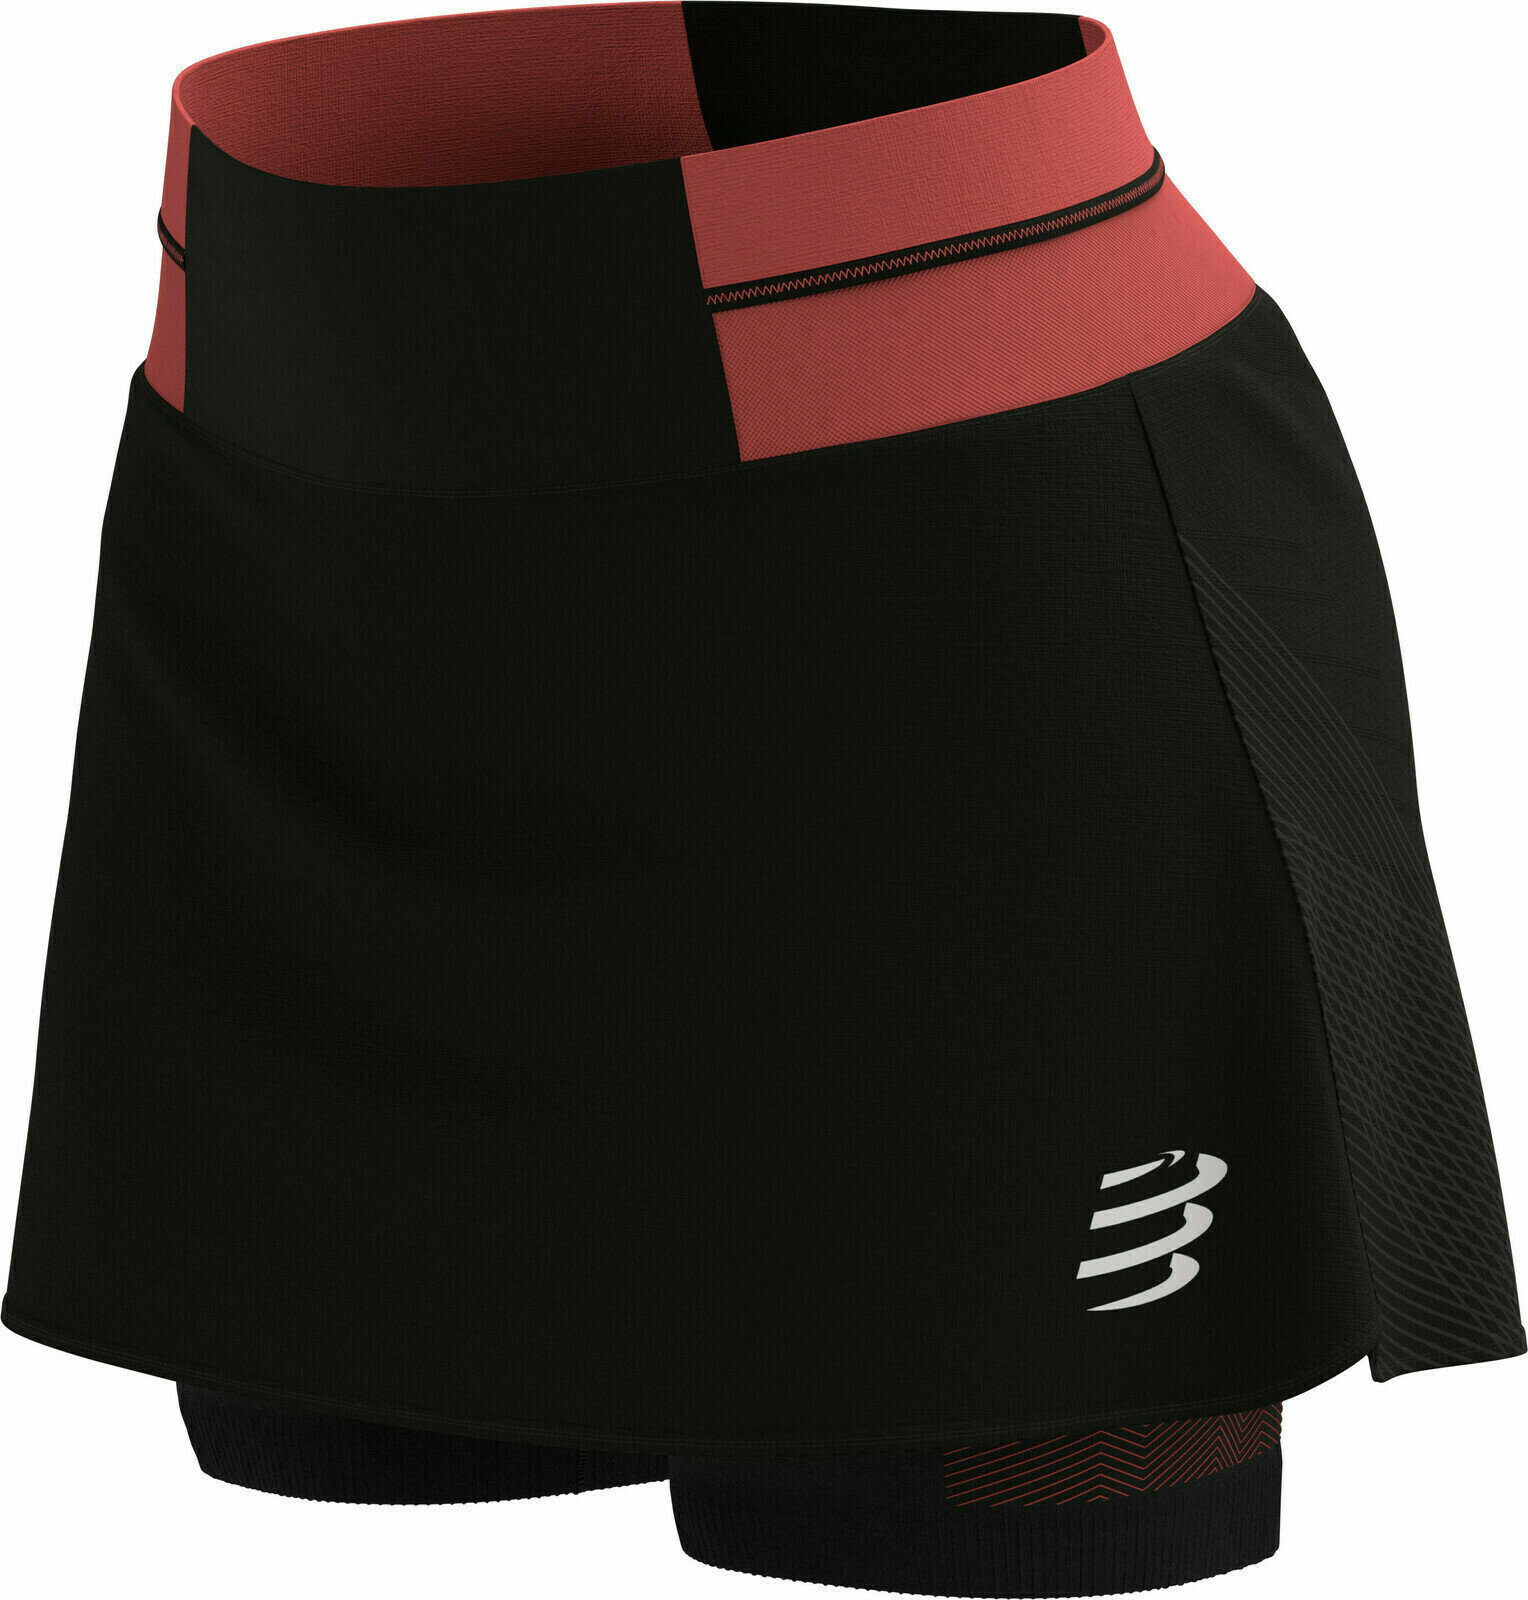 Futórövidnadrágok
 Compressport Performance Skirt Black/Coral M Futórövidnadrágok